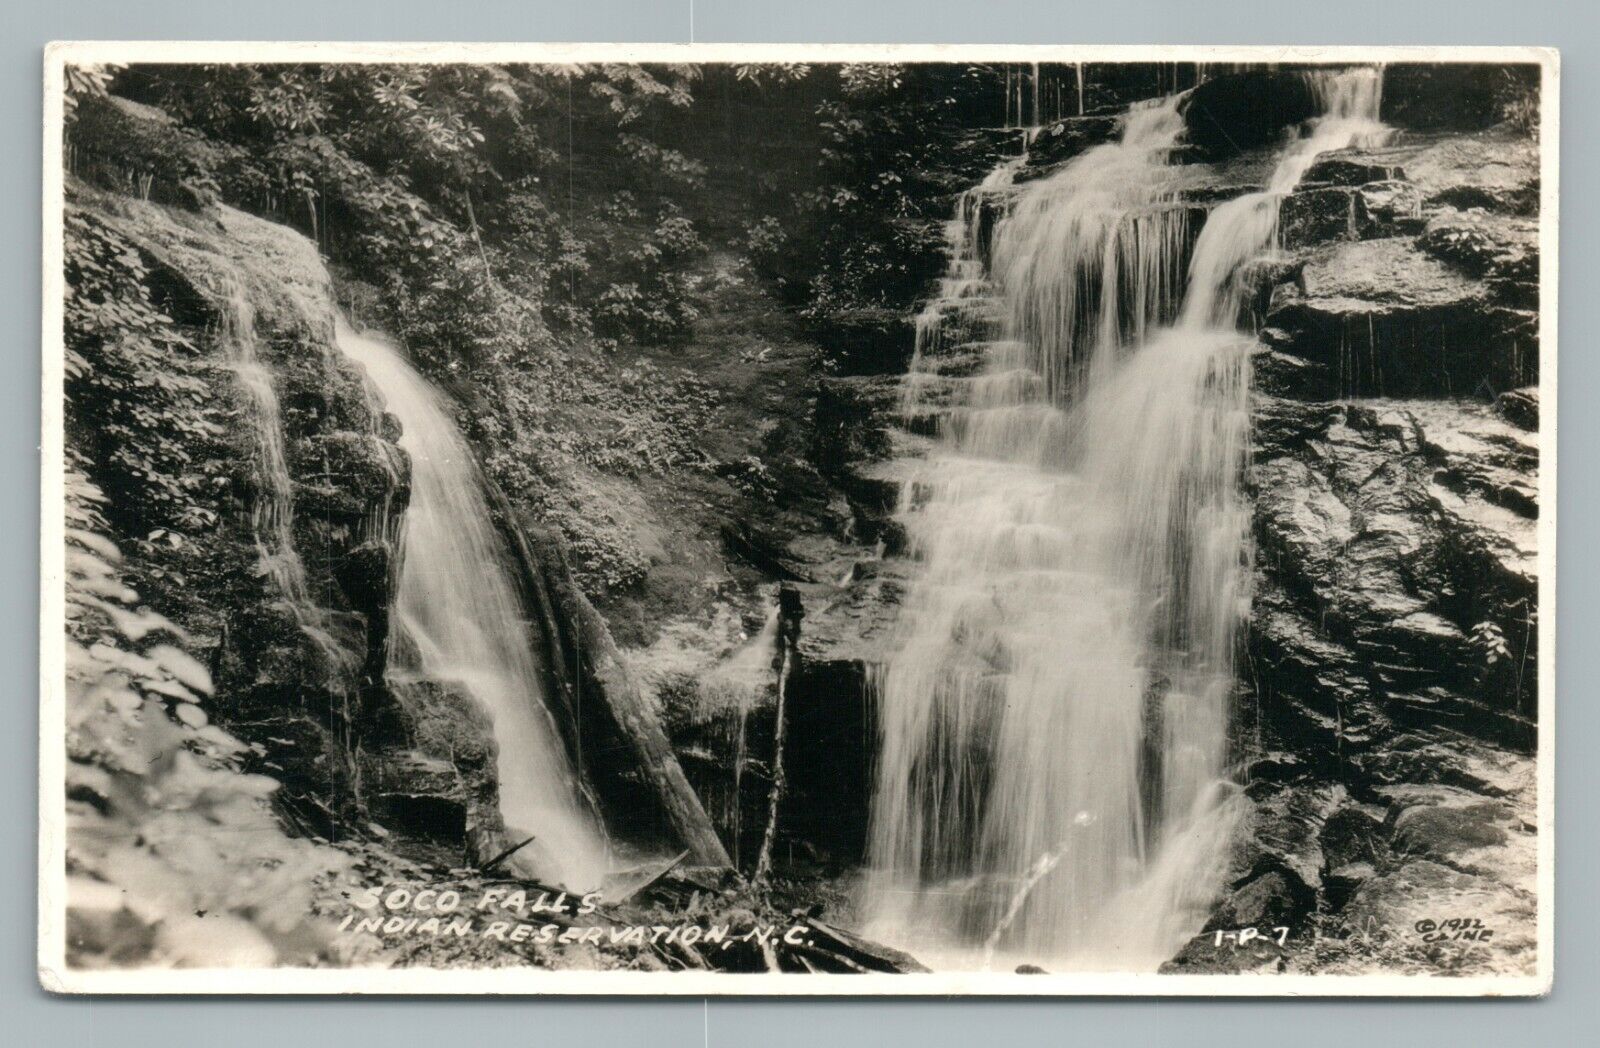 Soco Falls—Cherokee Indian Reservation RPPC North Carolina—Rare Cline Photo 1932